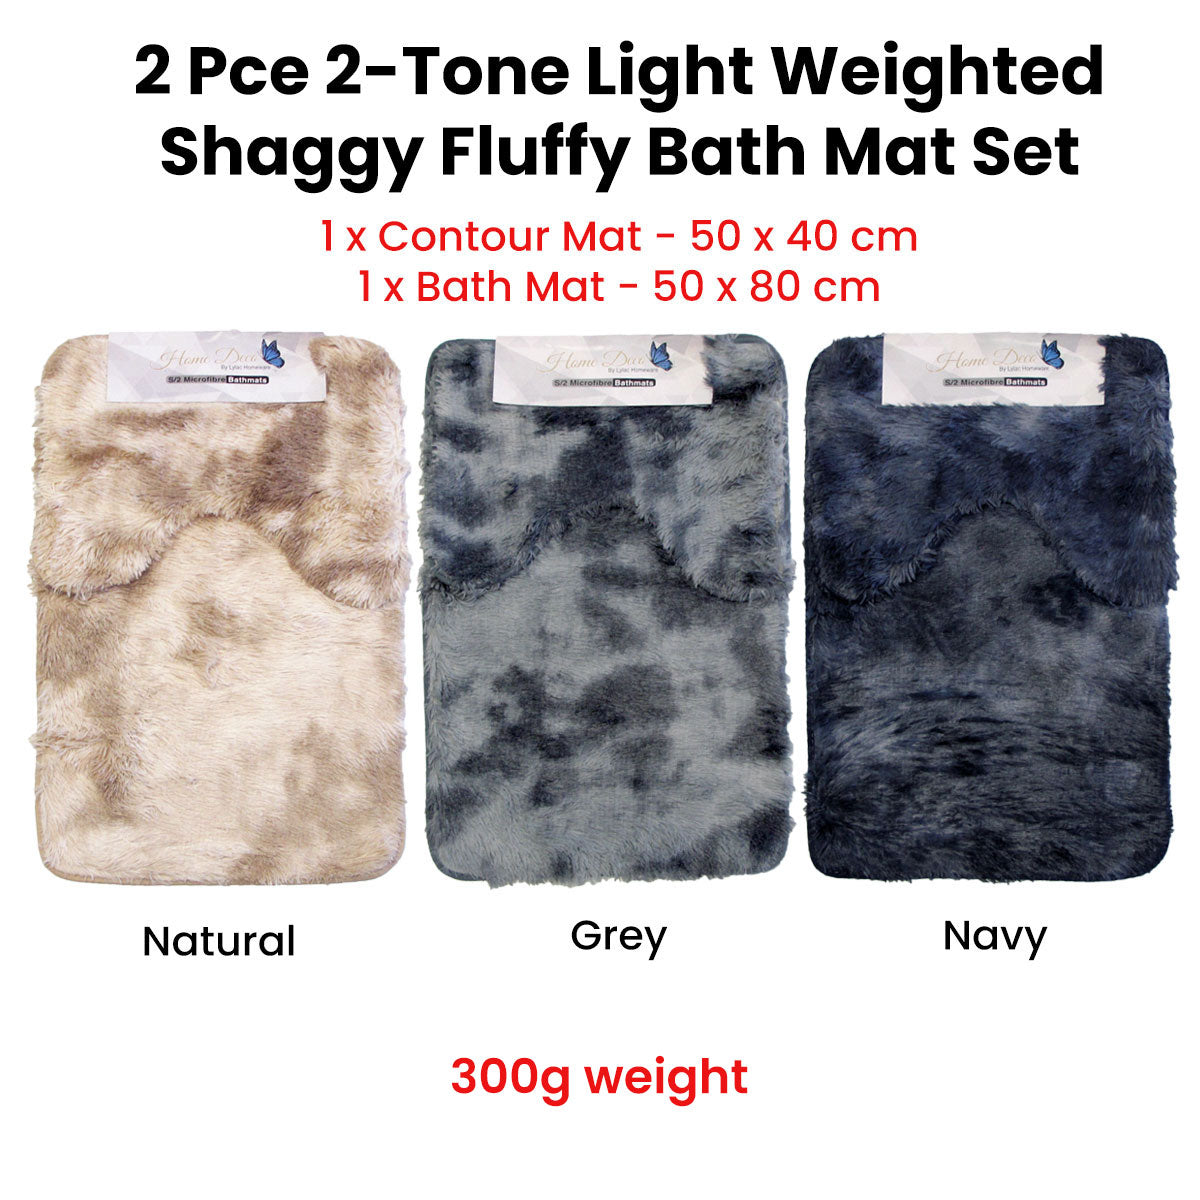 2 Pce 2-Toned Extra Light Weighted Shaggy Fluffy Bath Mat Set Grey